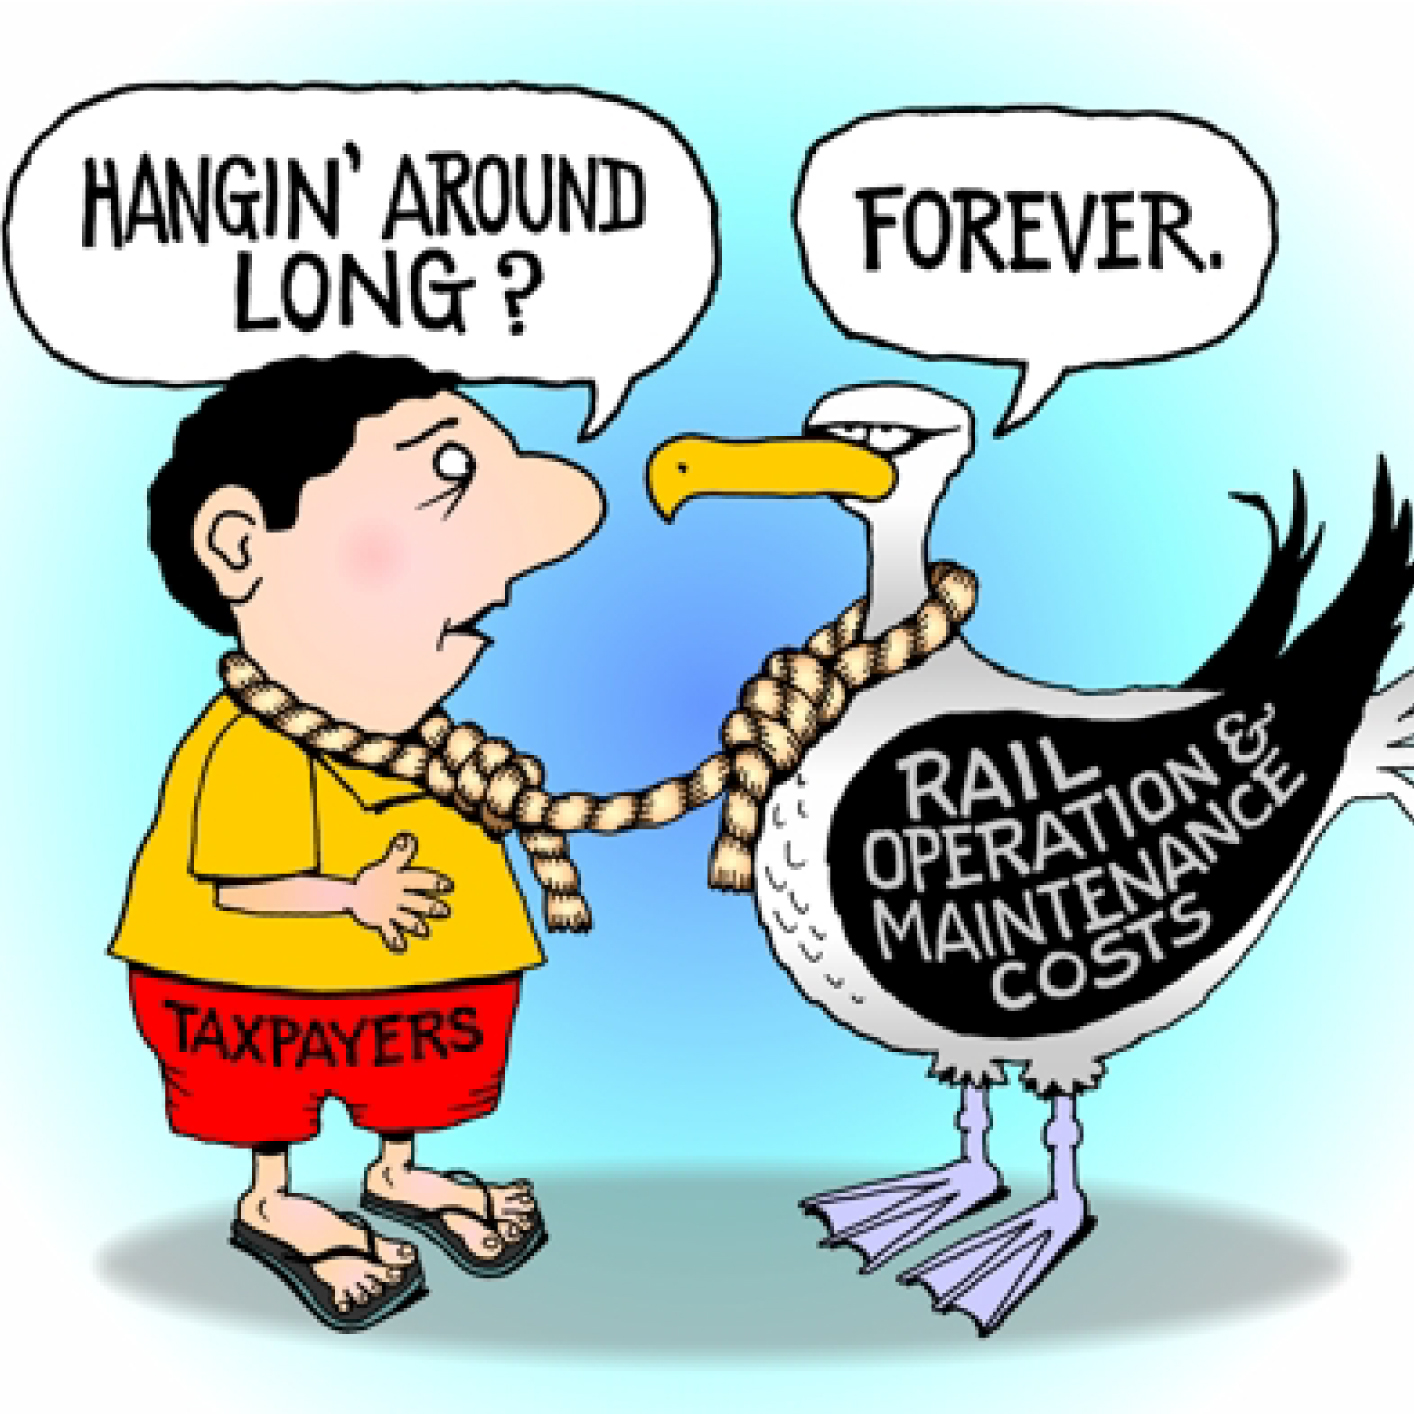 Editorial Cartoon: Hanging around long?<br />
Copyright  John S. Pritchett